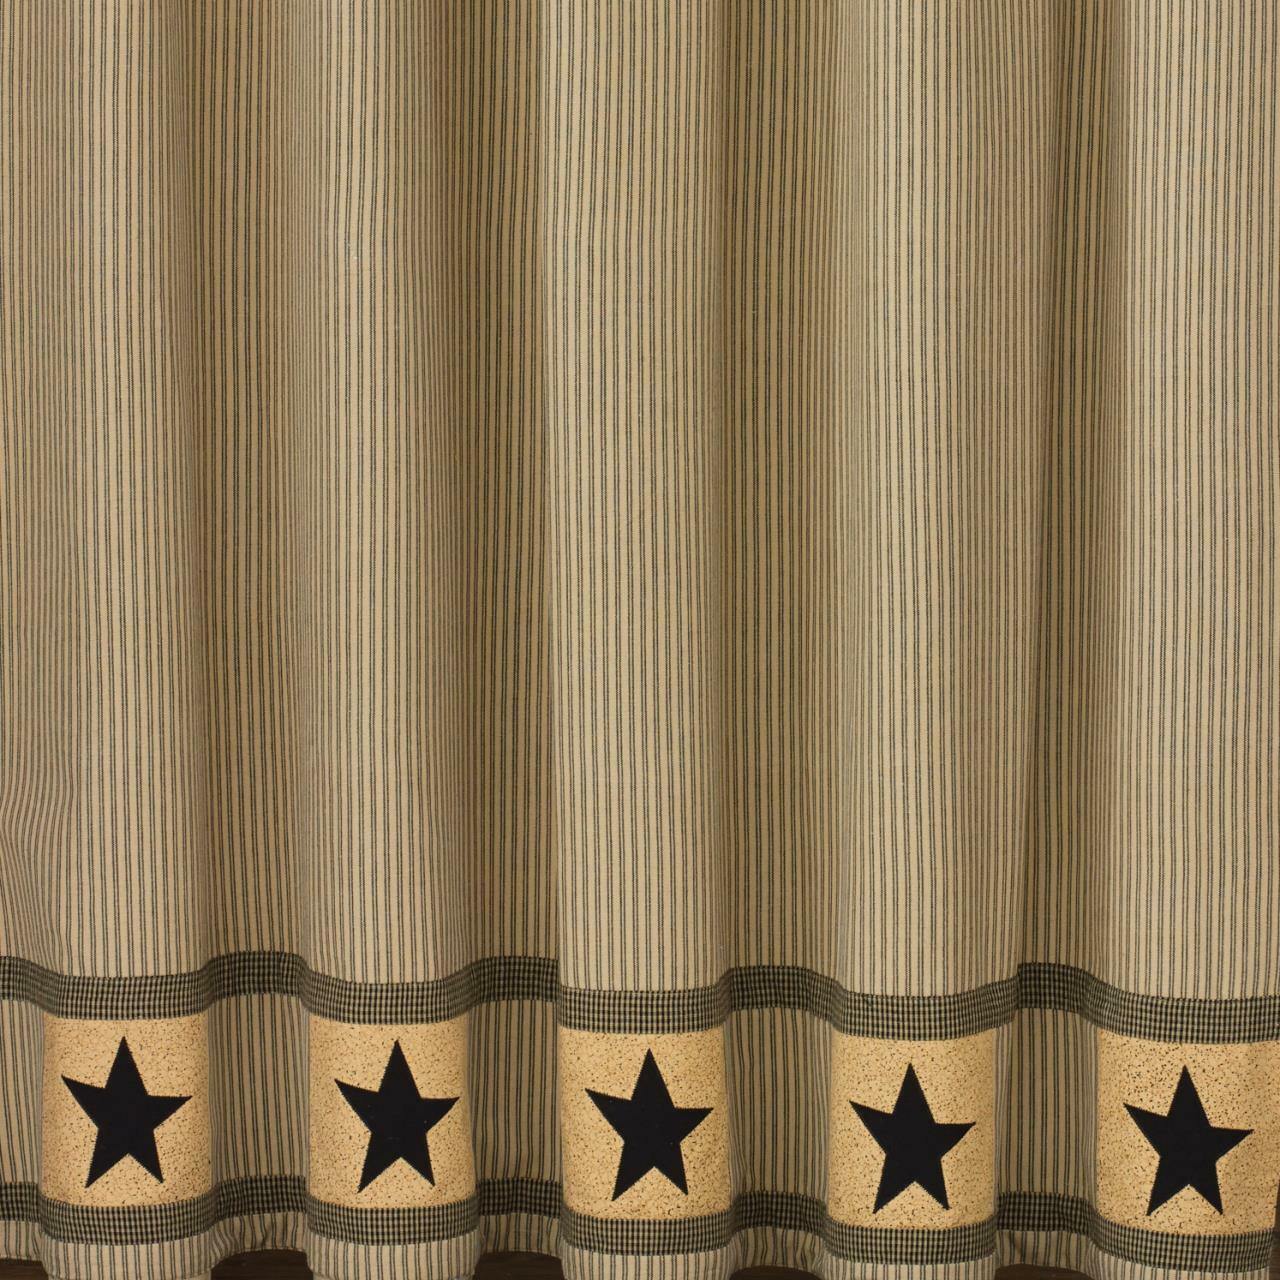 Primitive Star Shower Curtain - 72" x 72" Park Designs - The Fox Decor